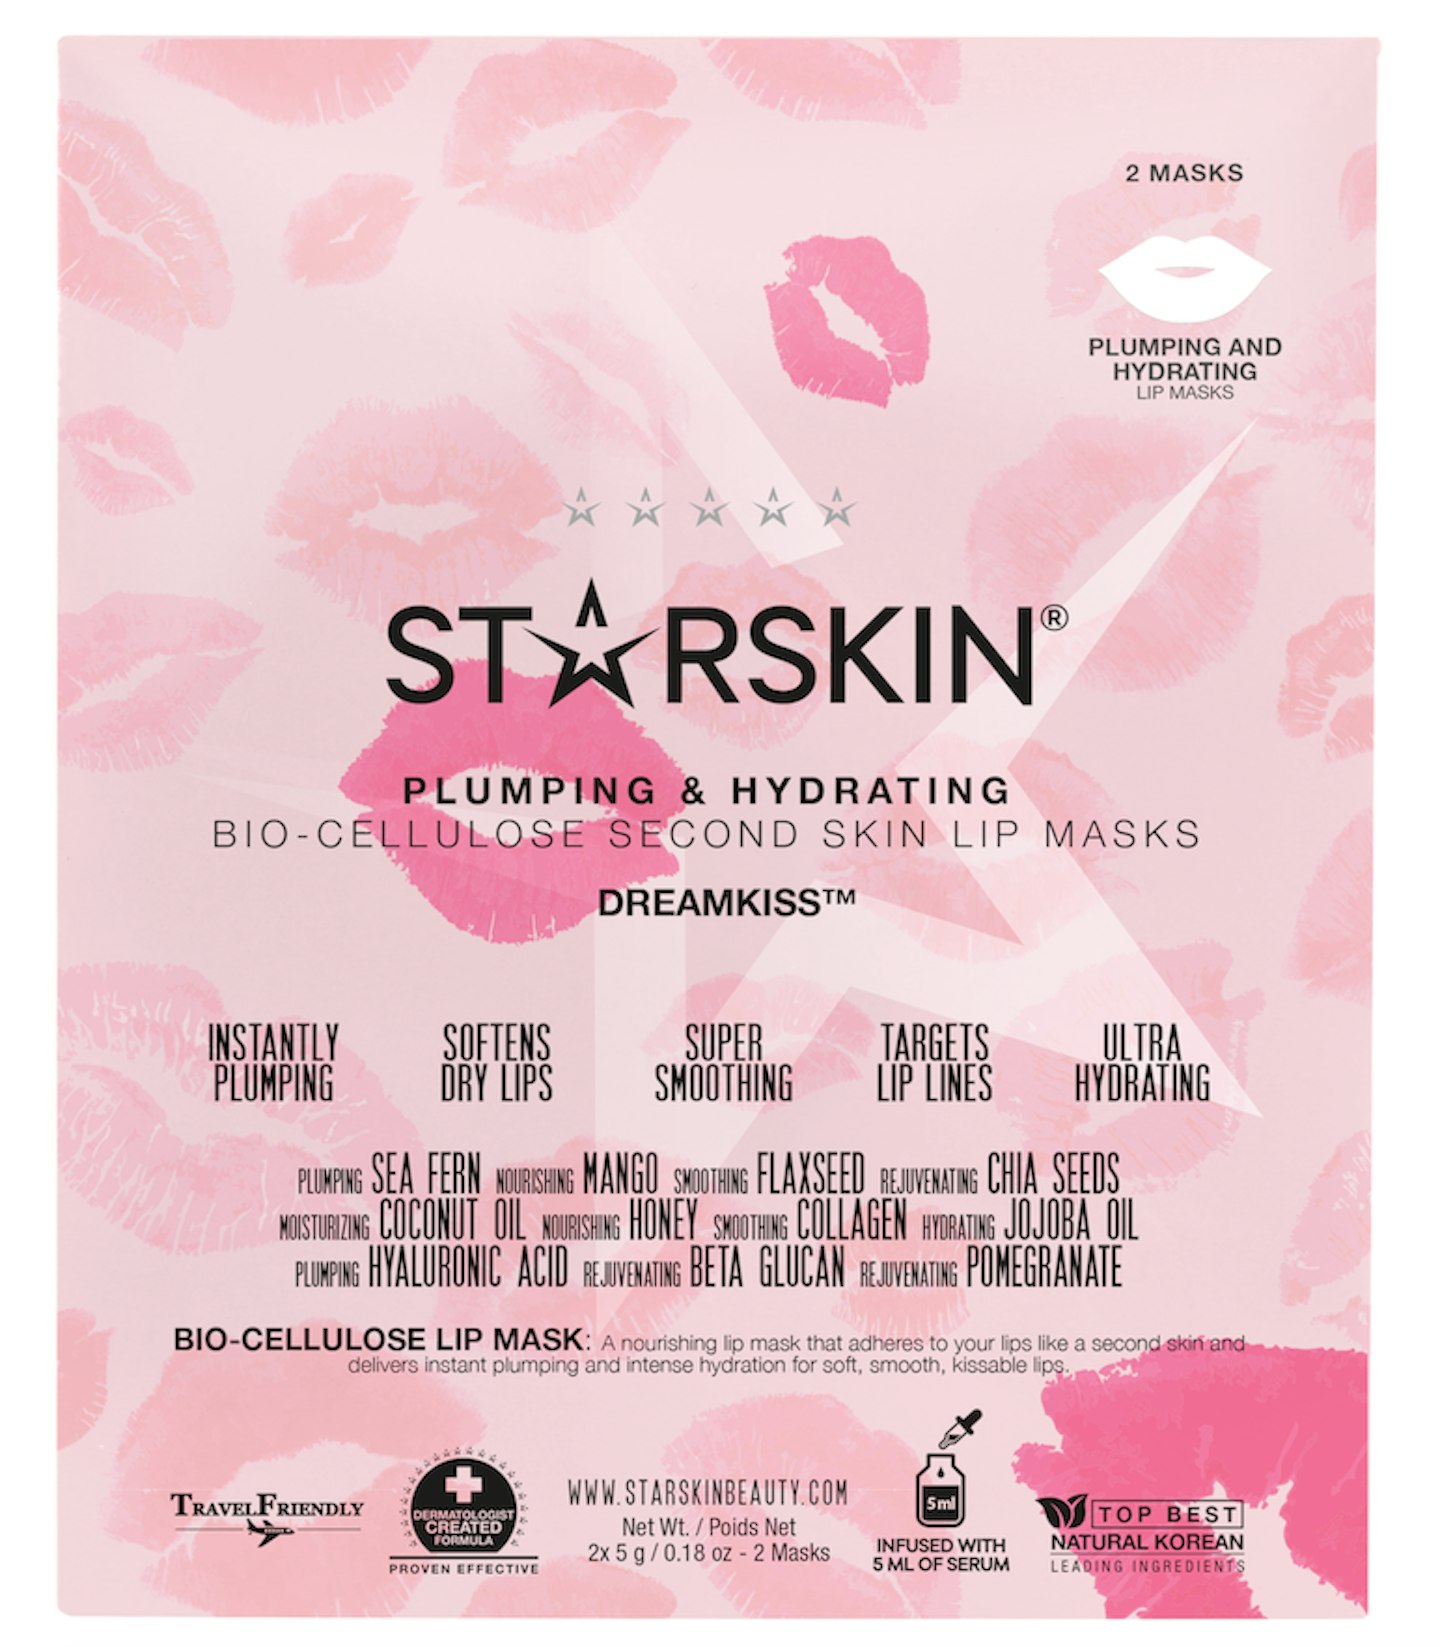 STARSKIN DREAMKISSu2122 Plumping and Hydrating Bio-Cellulose Lip Mask (2 Masks)